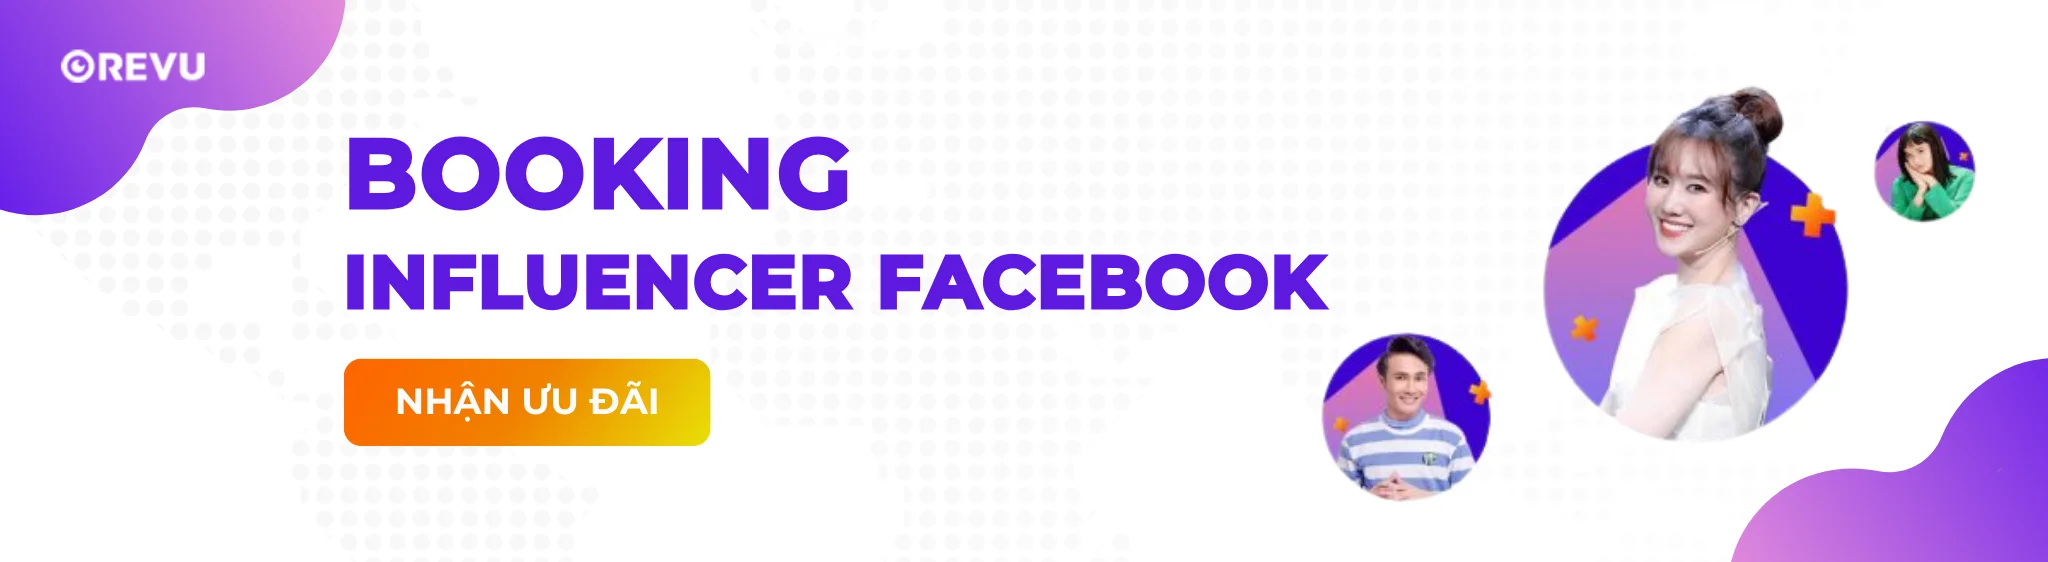 dịch vụ booking influencer facebook việt nam